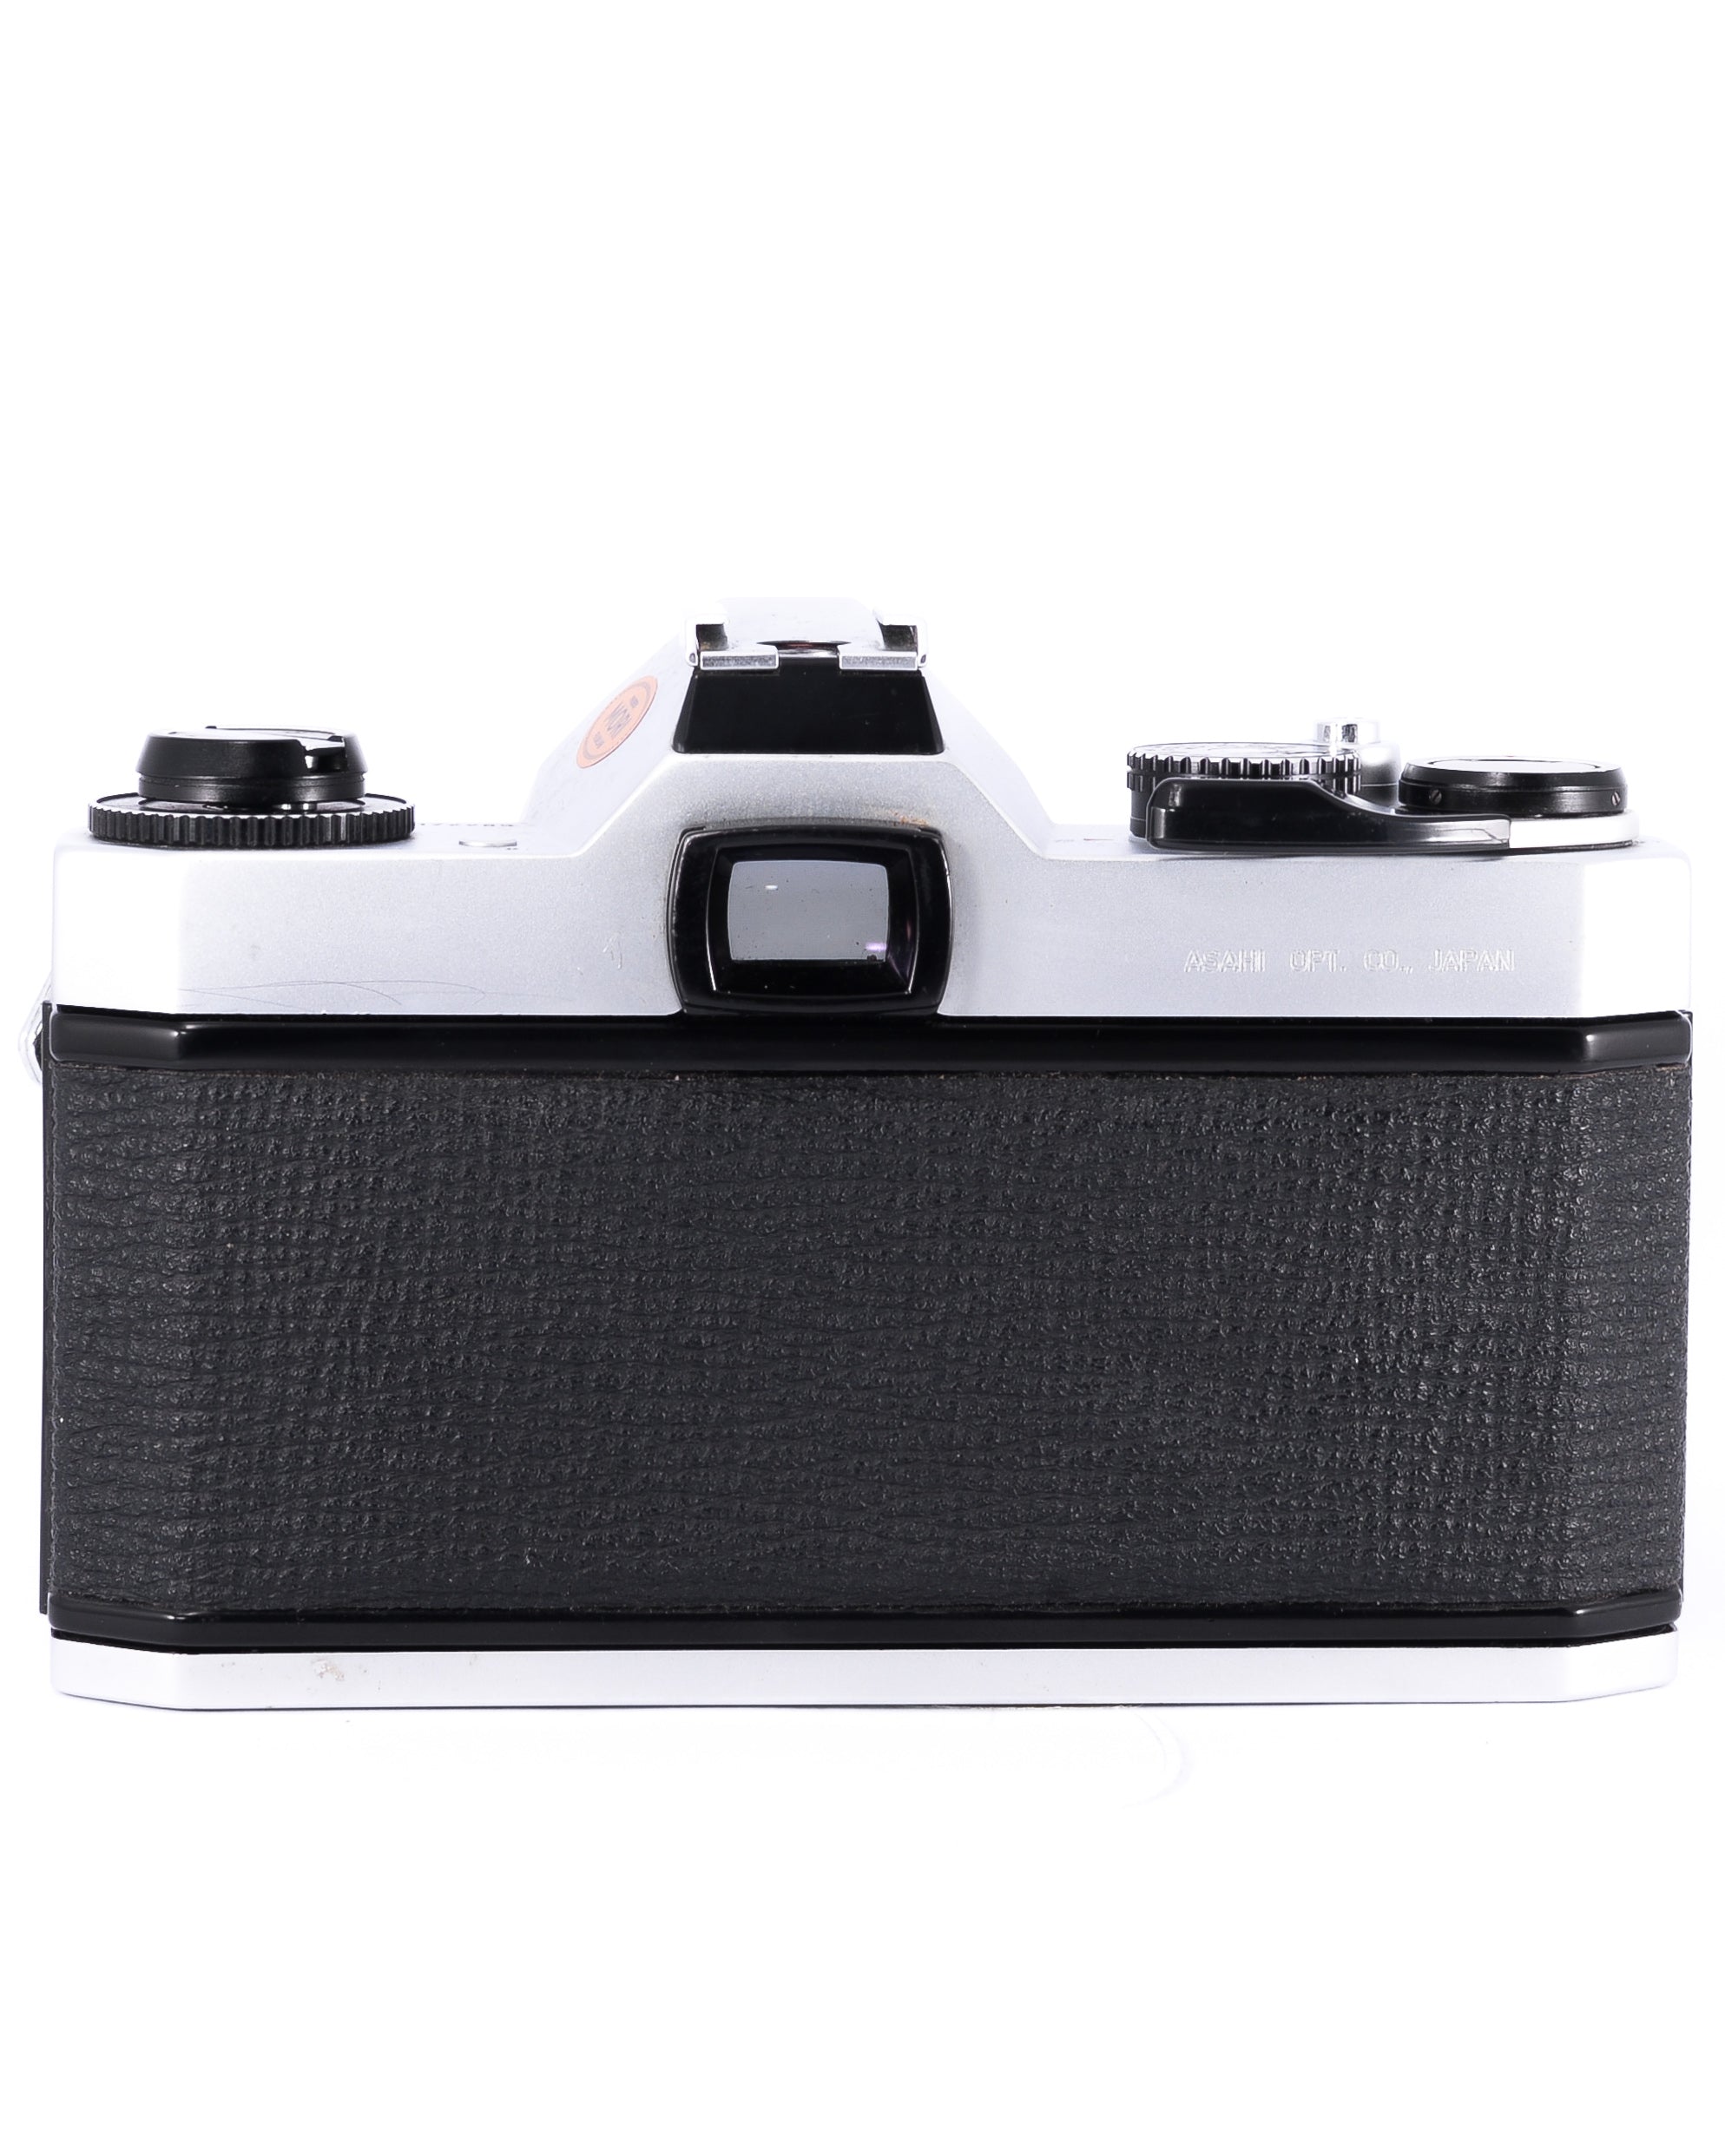 Pentax KM 35mm SLR film camera with 50mm f1.4 lens - Mori Film Lab